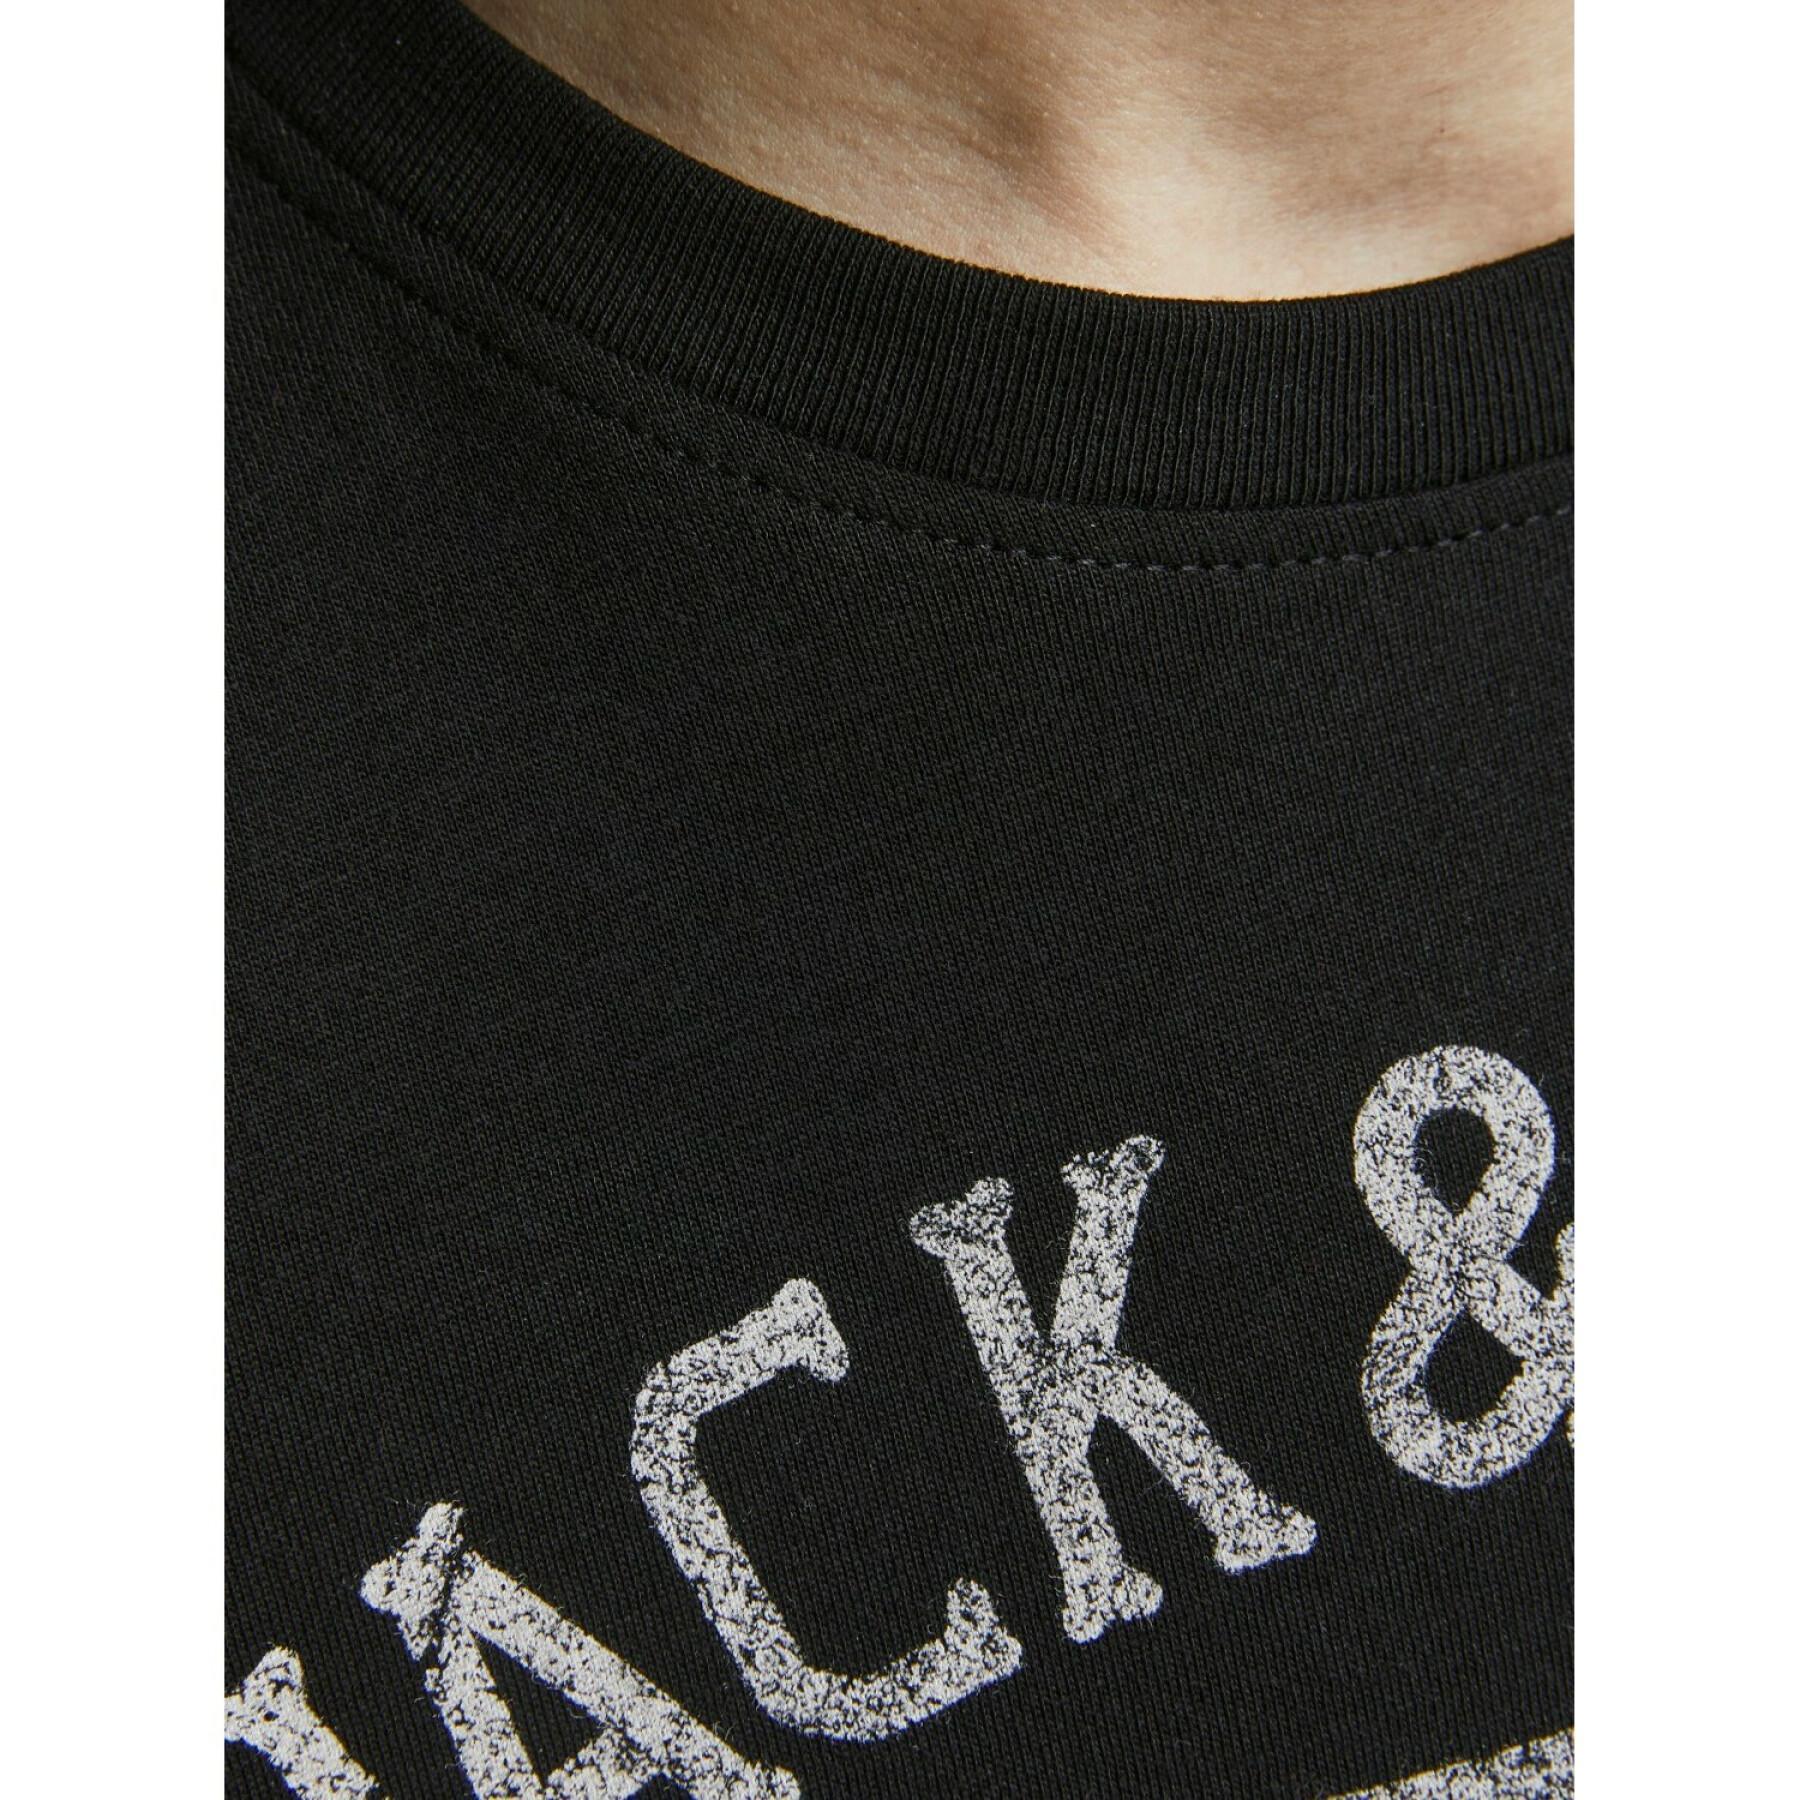 T-shirt manga comprida criança Jack & Jones Jeans